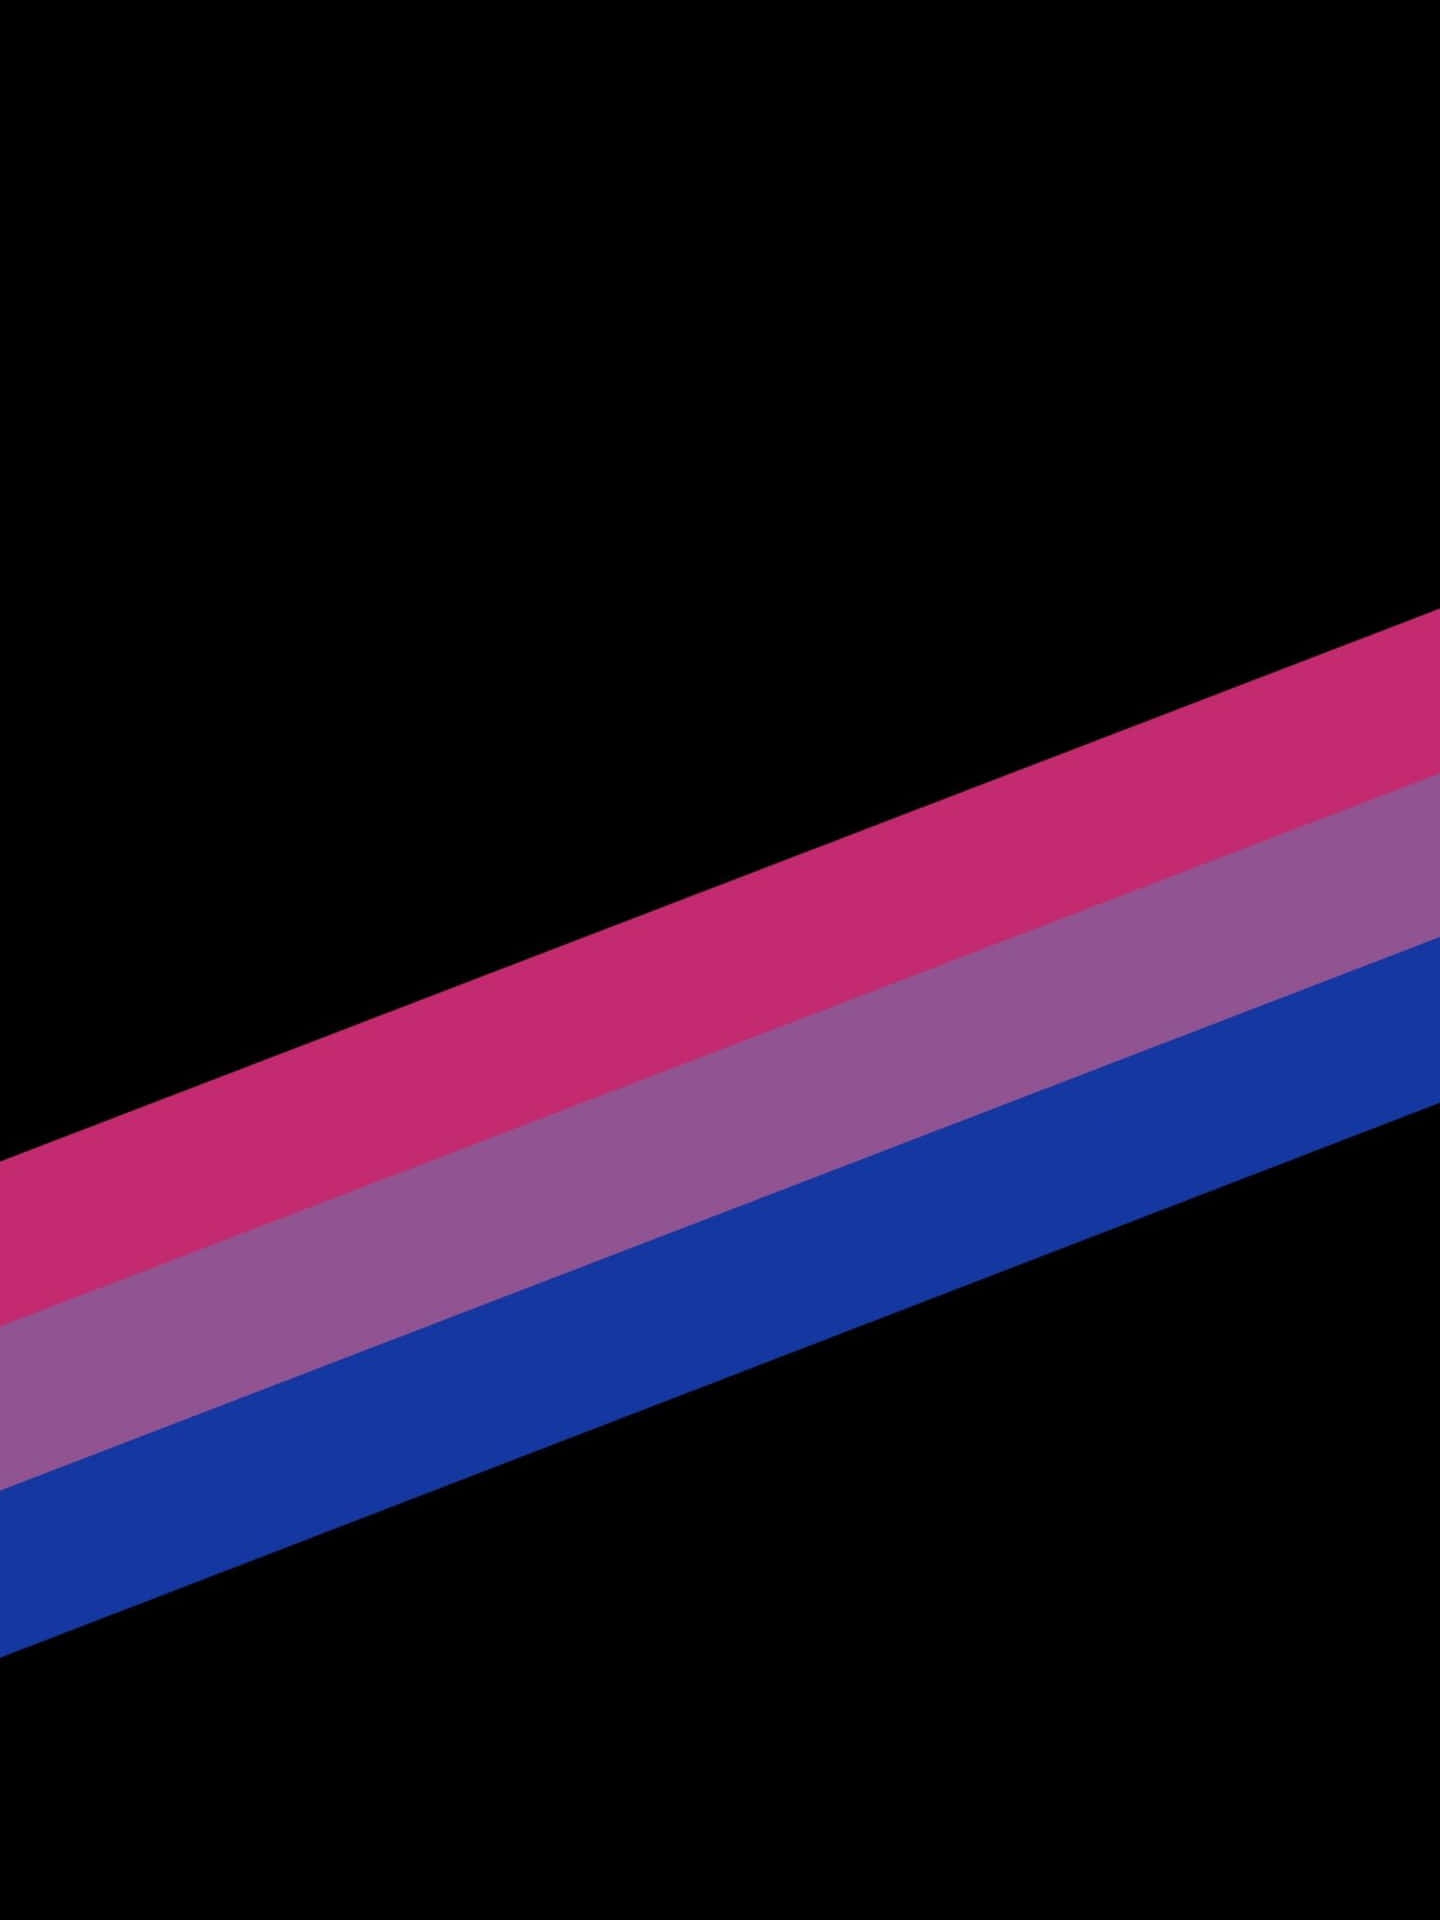 Aesthetic Lgbt Rainbow Bisexual Flag Wallpaper